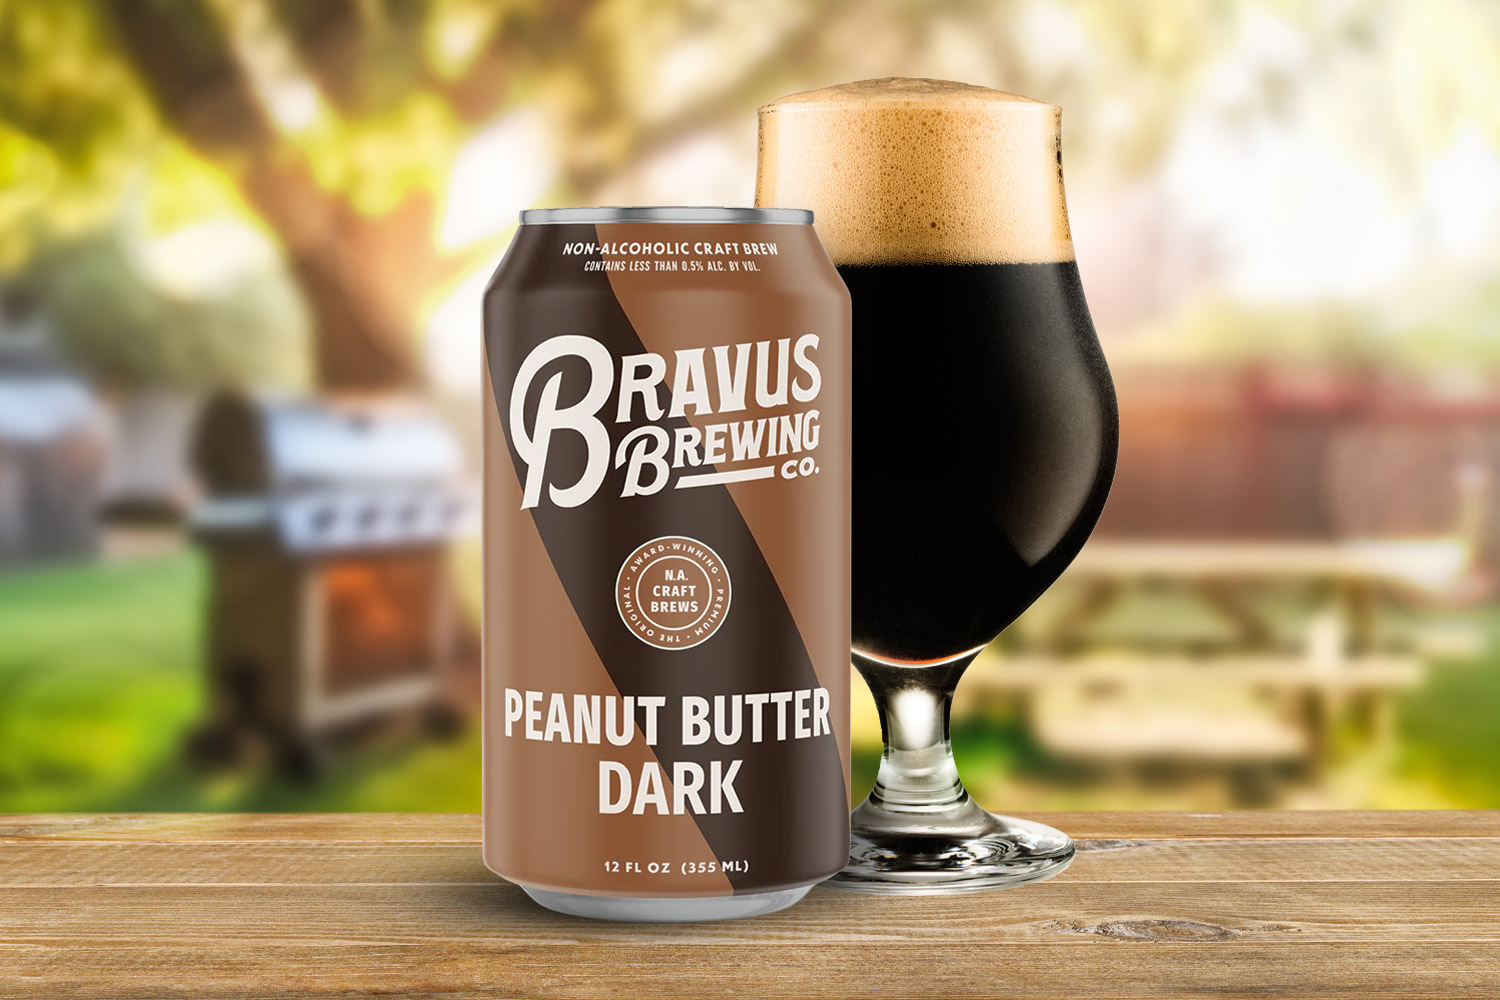 Bravus Peanut Butter Dark